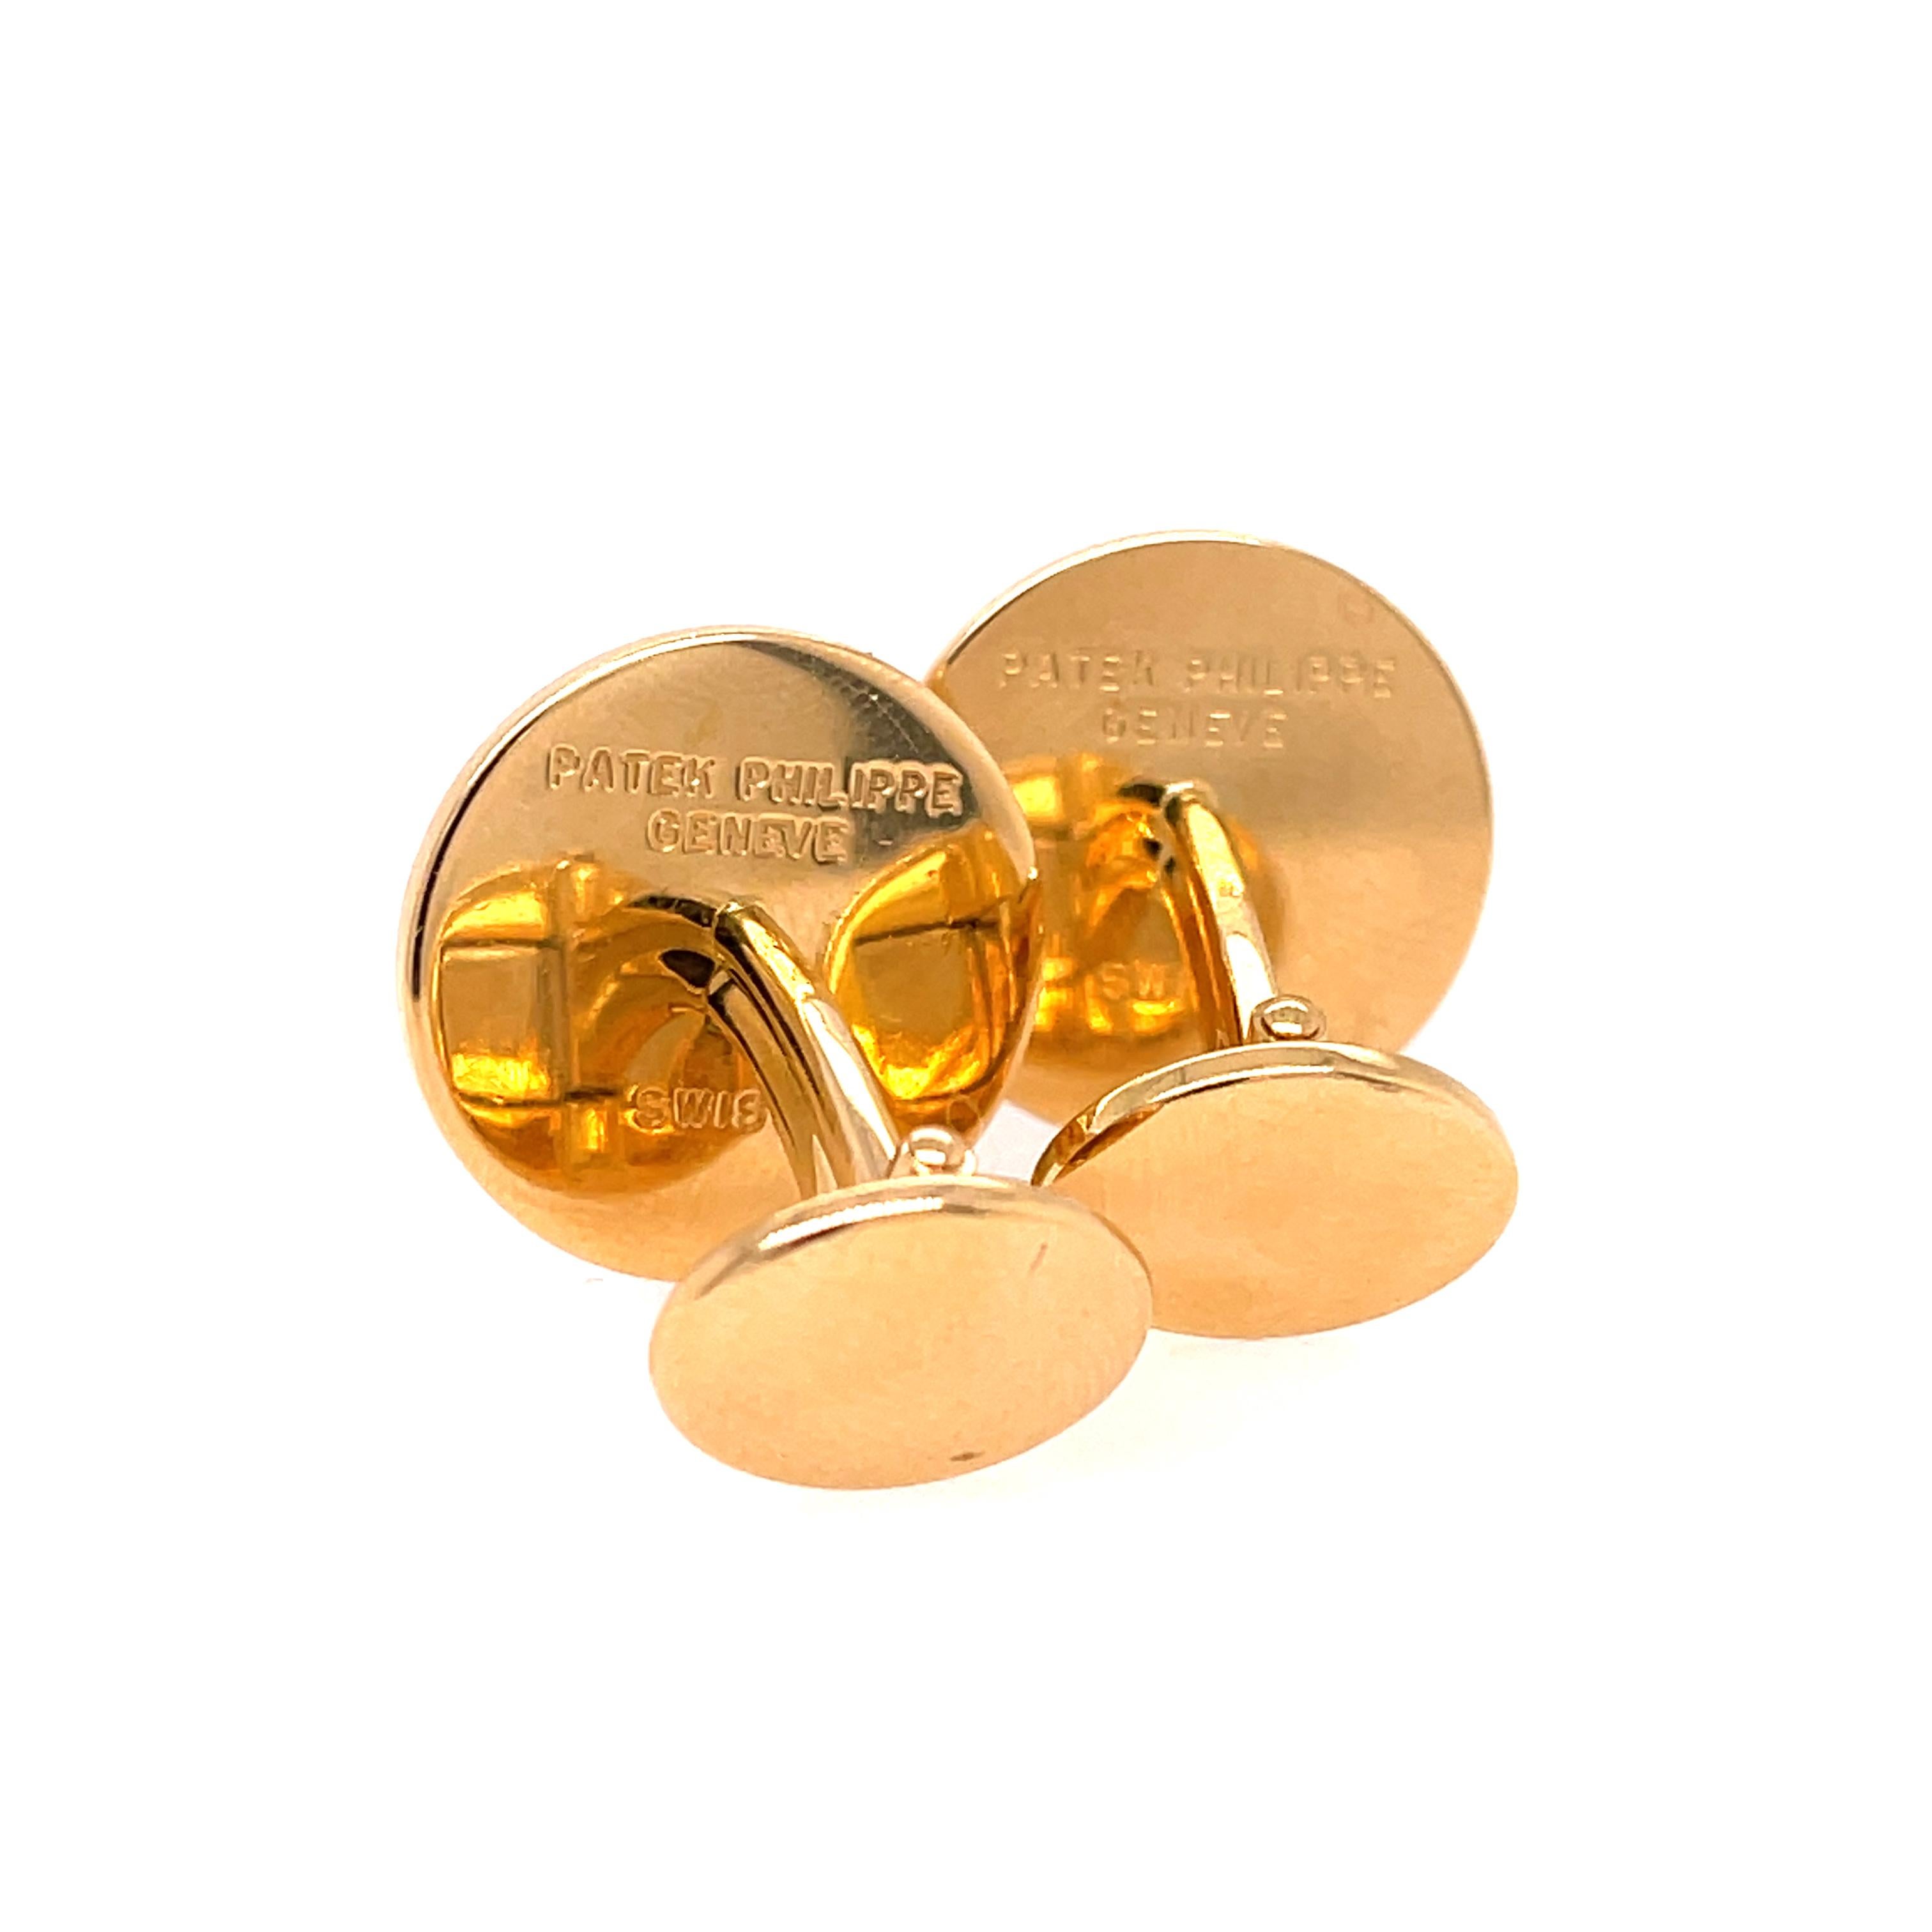 Patek Phillipe Calatrava cuff links in 18k yellow gold. Stamped Patek Phillipe Geneve Swiss 750

21 grams